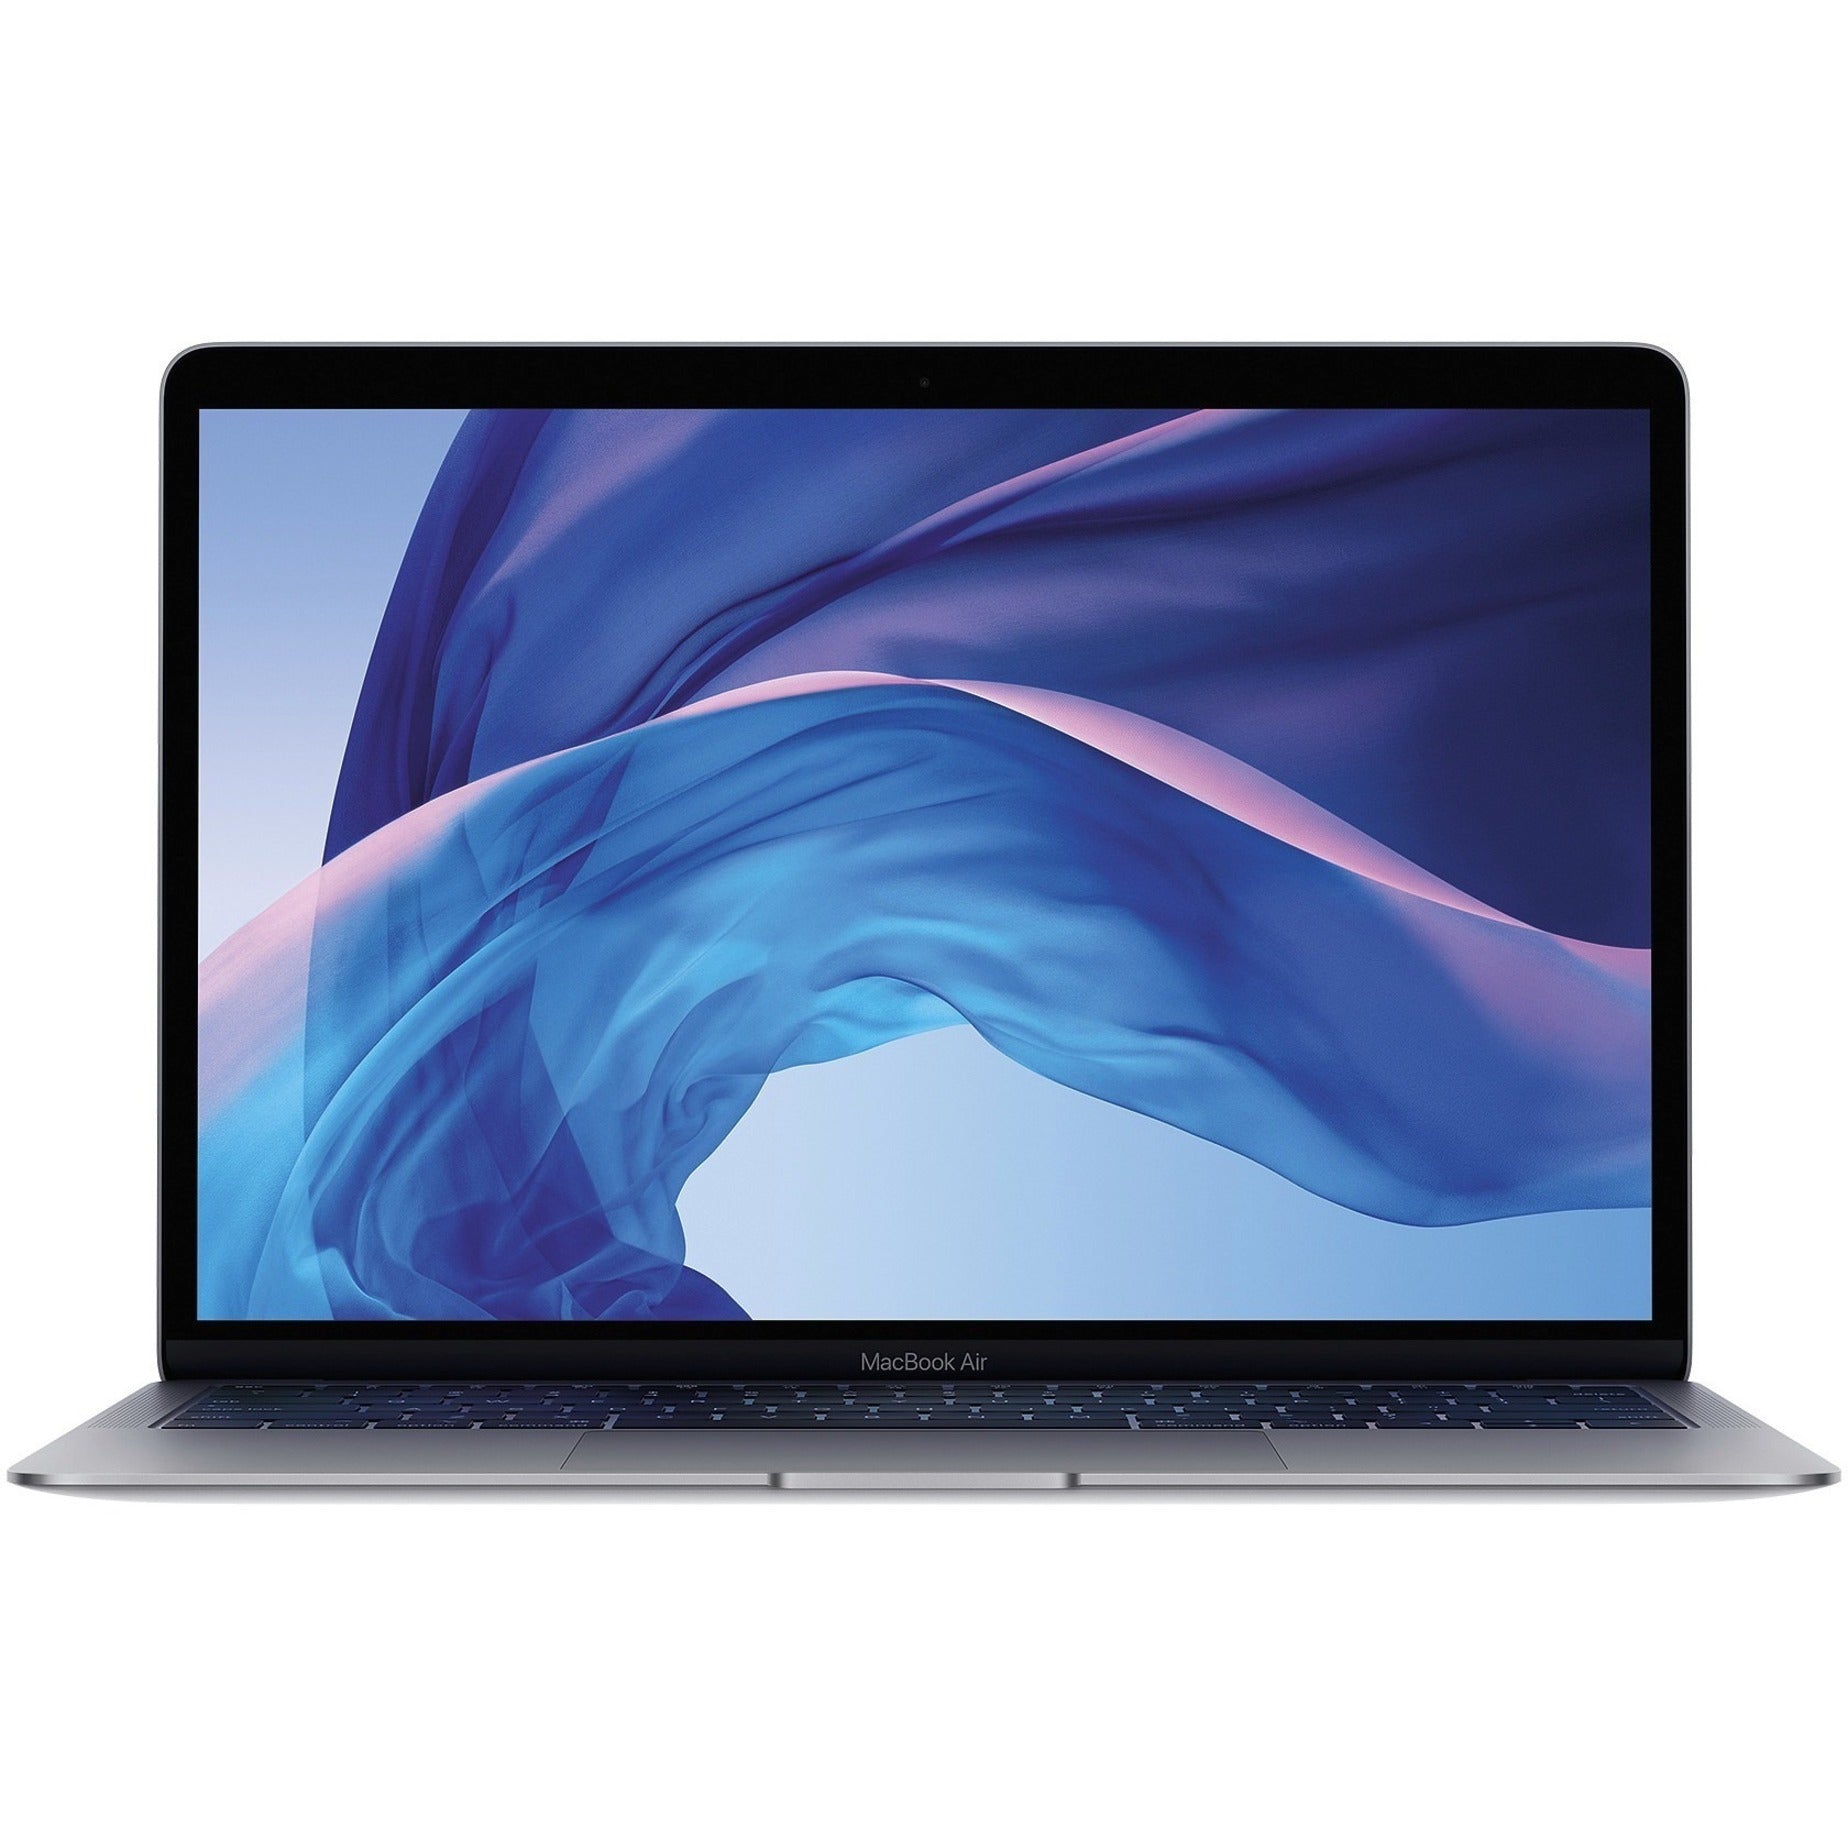 Apple MVFH2LL/A MacBook Air 13.3 Notebook, Intel Core i5, 8GB RAM, 128GB SSD, macOS Mojave